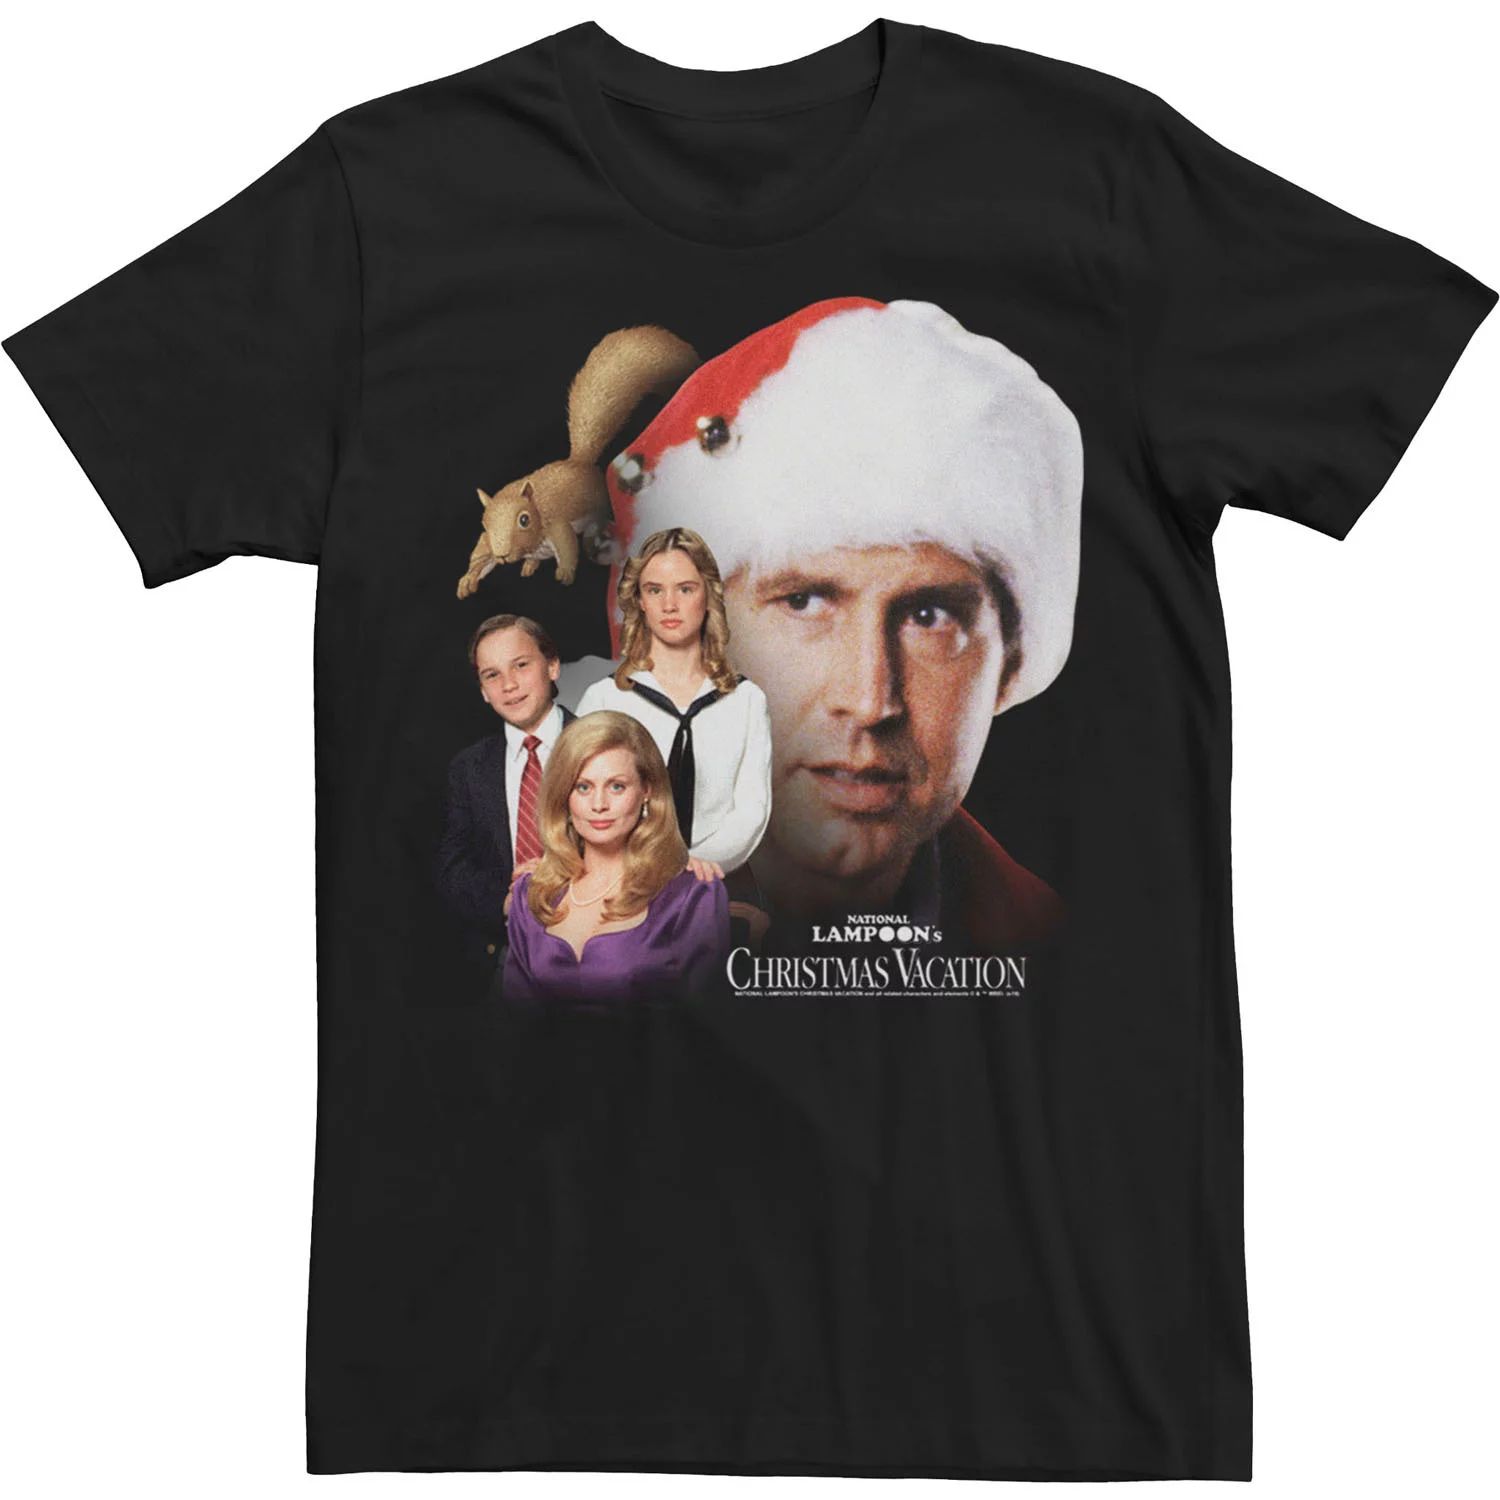 цена Мужская футболка National Lampoon для рождественских каникул с семейным портретом Licensed Character